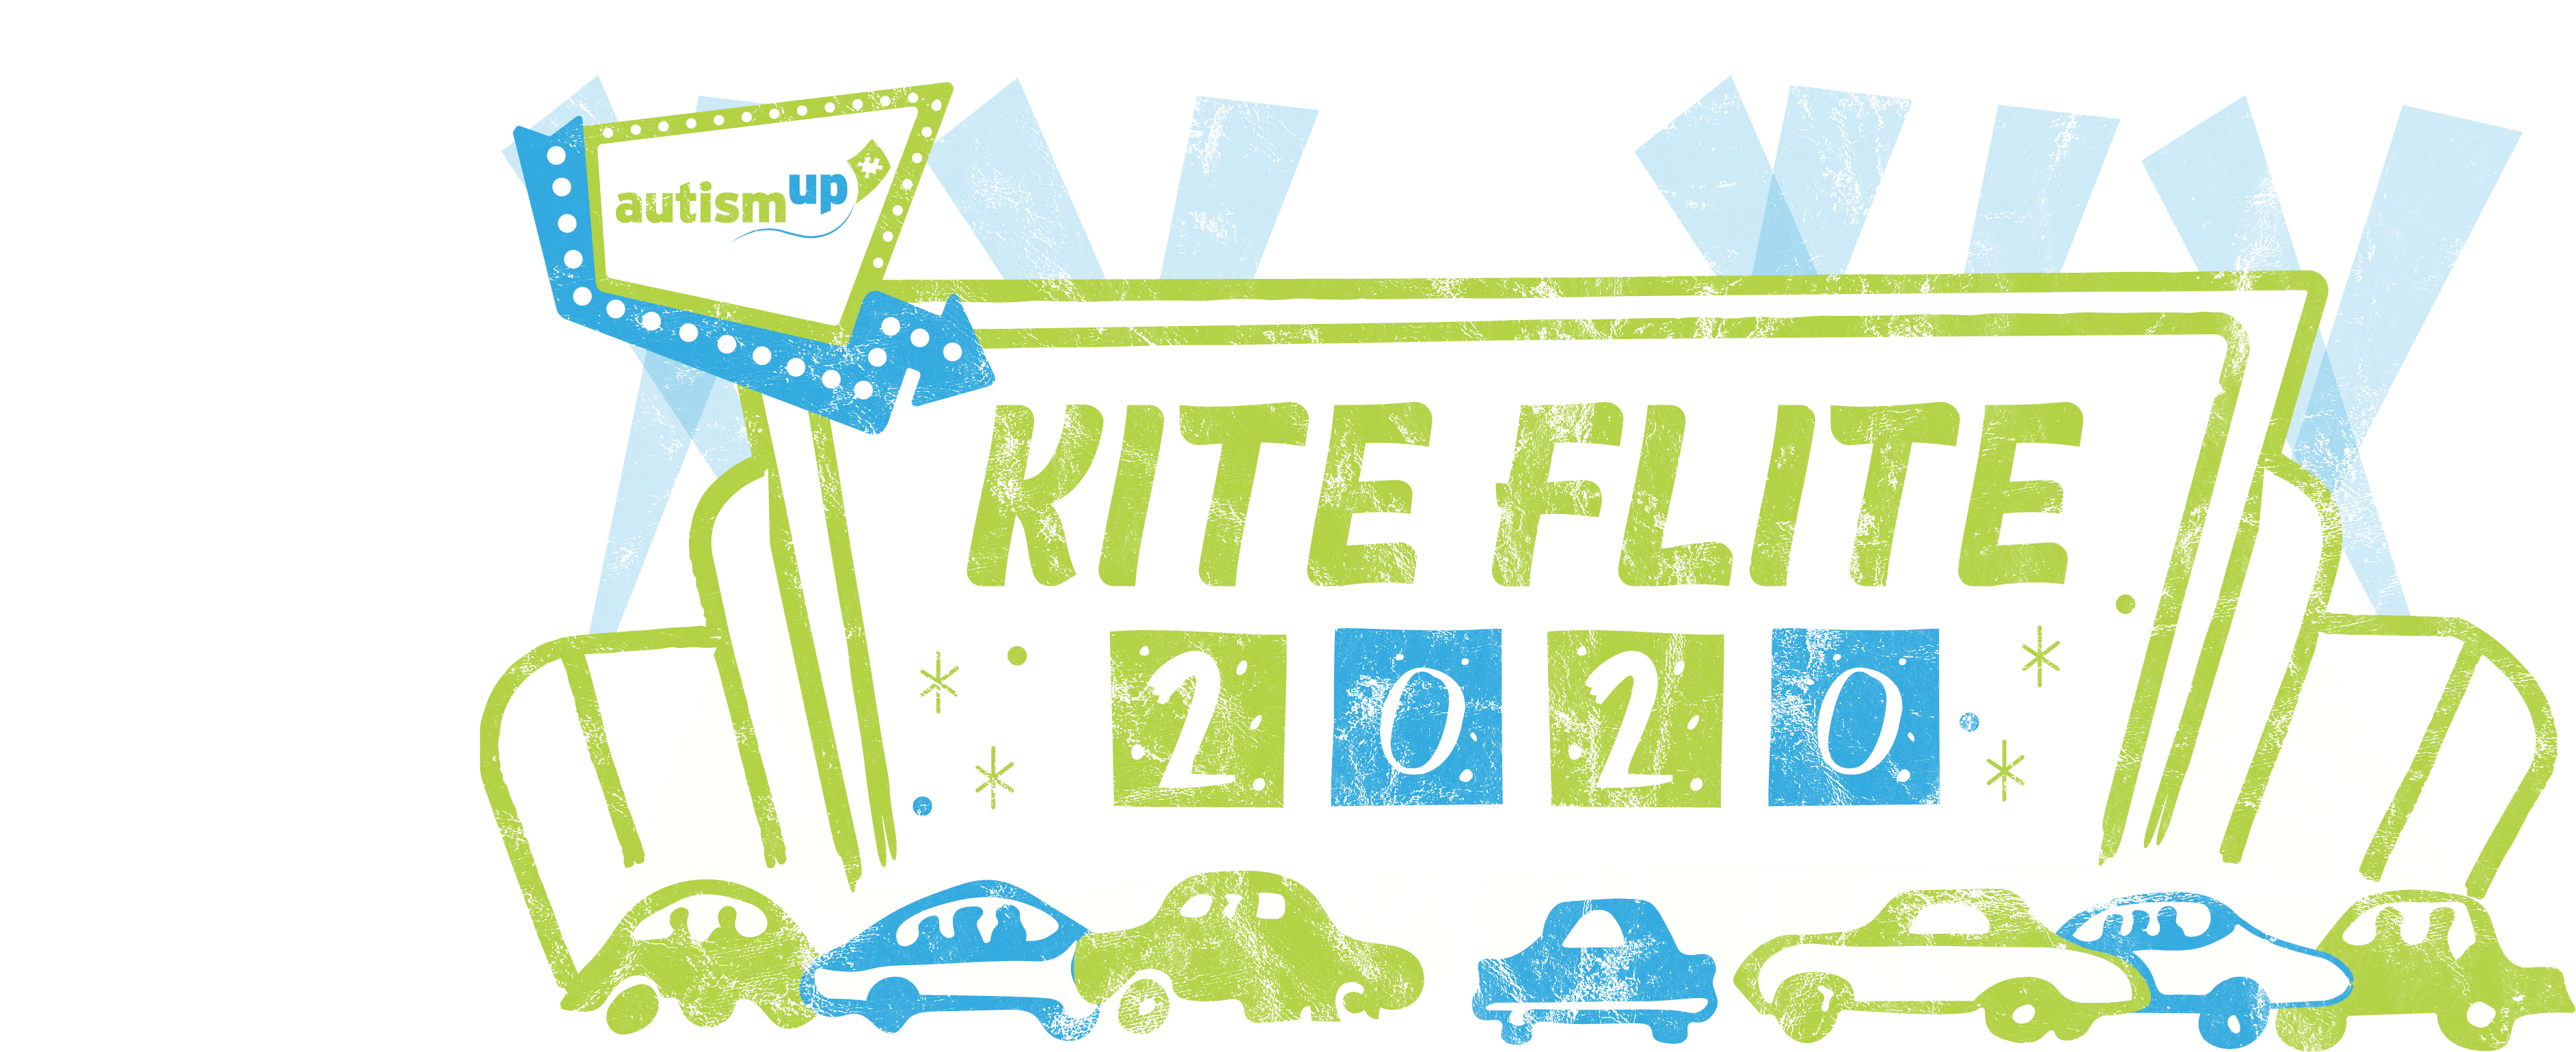 Kite Flite2020 Stamp